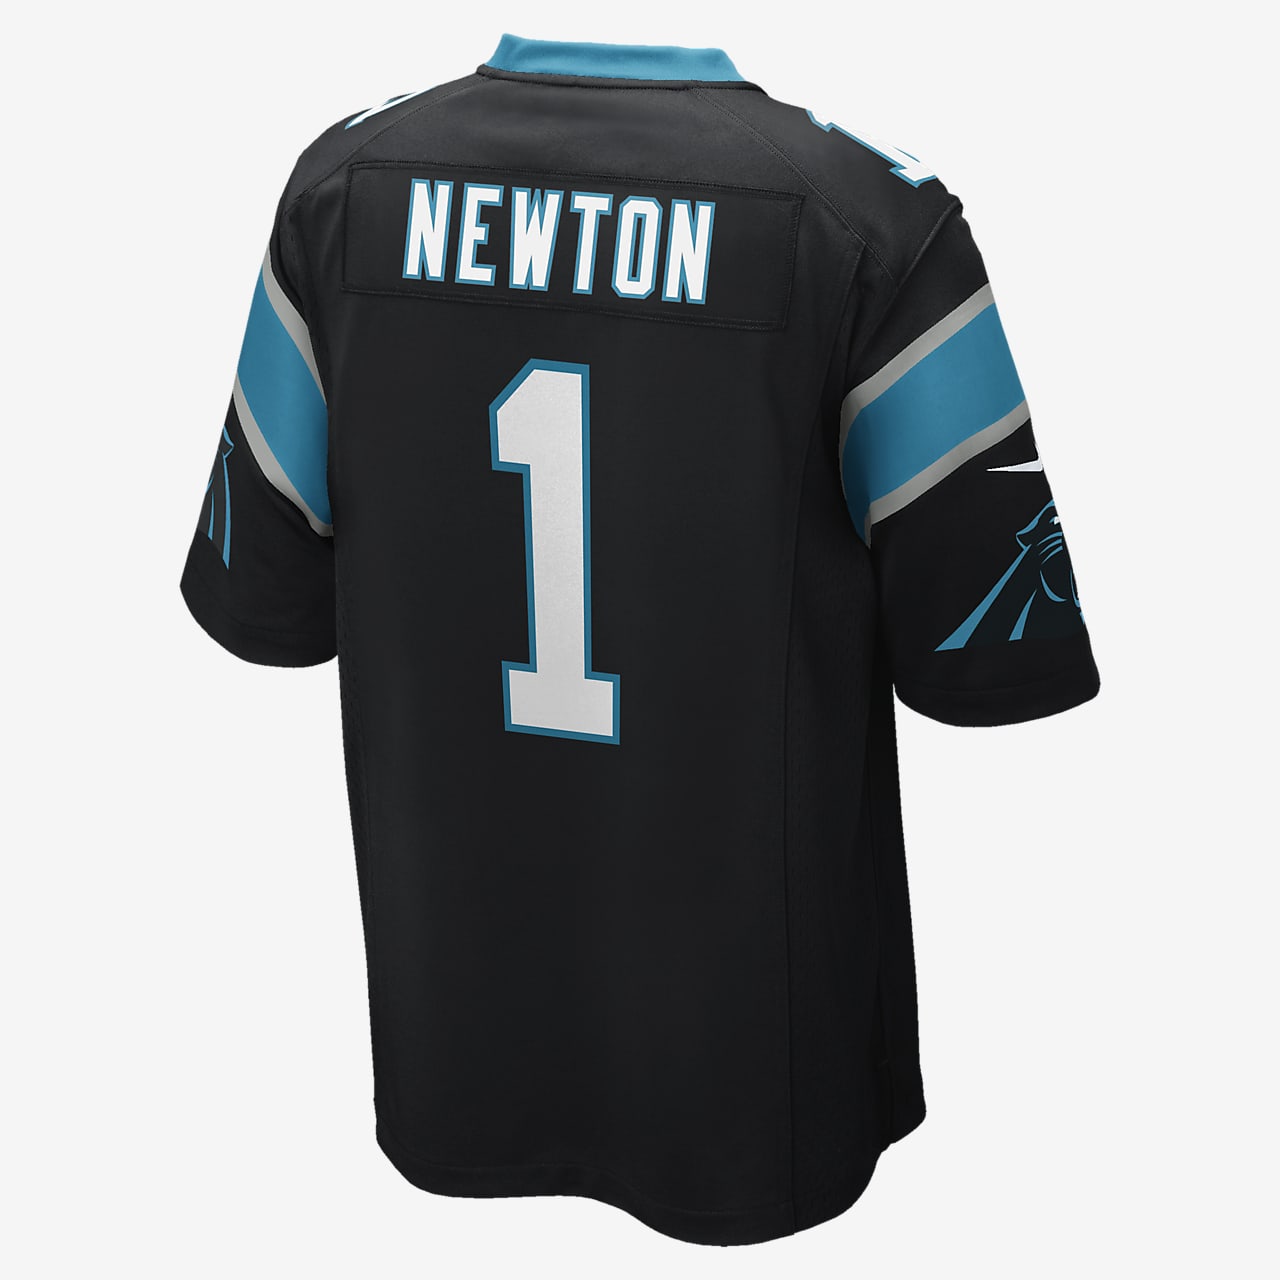 cameron newton jersey